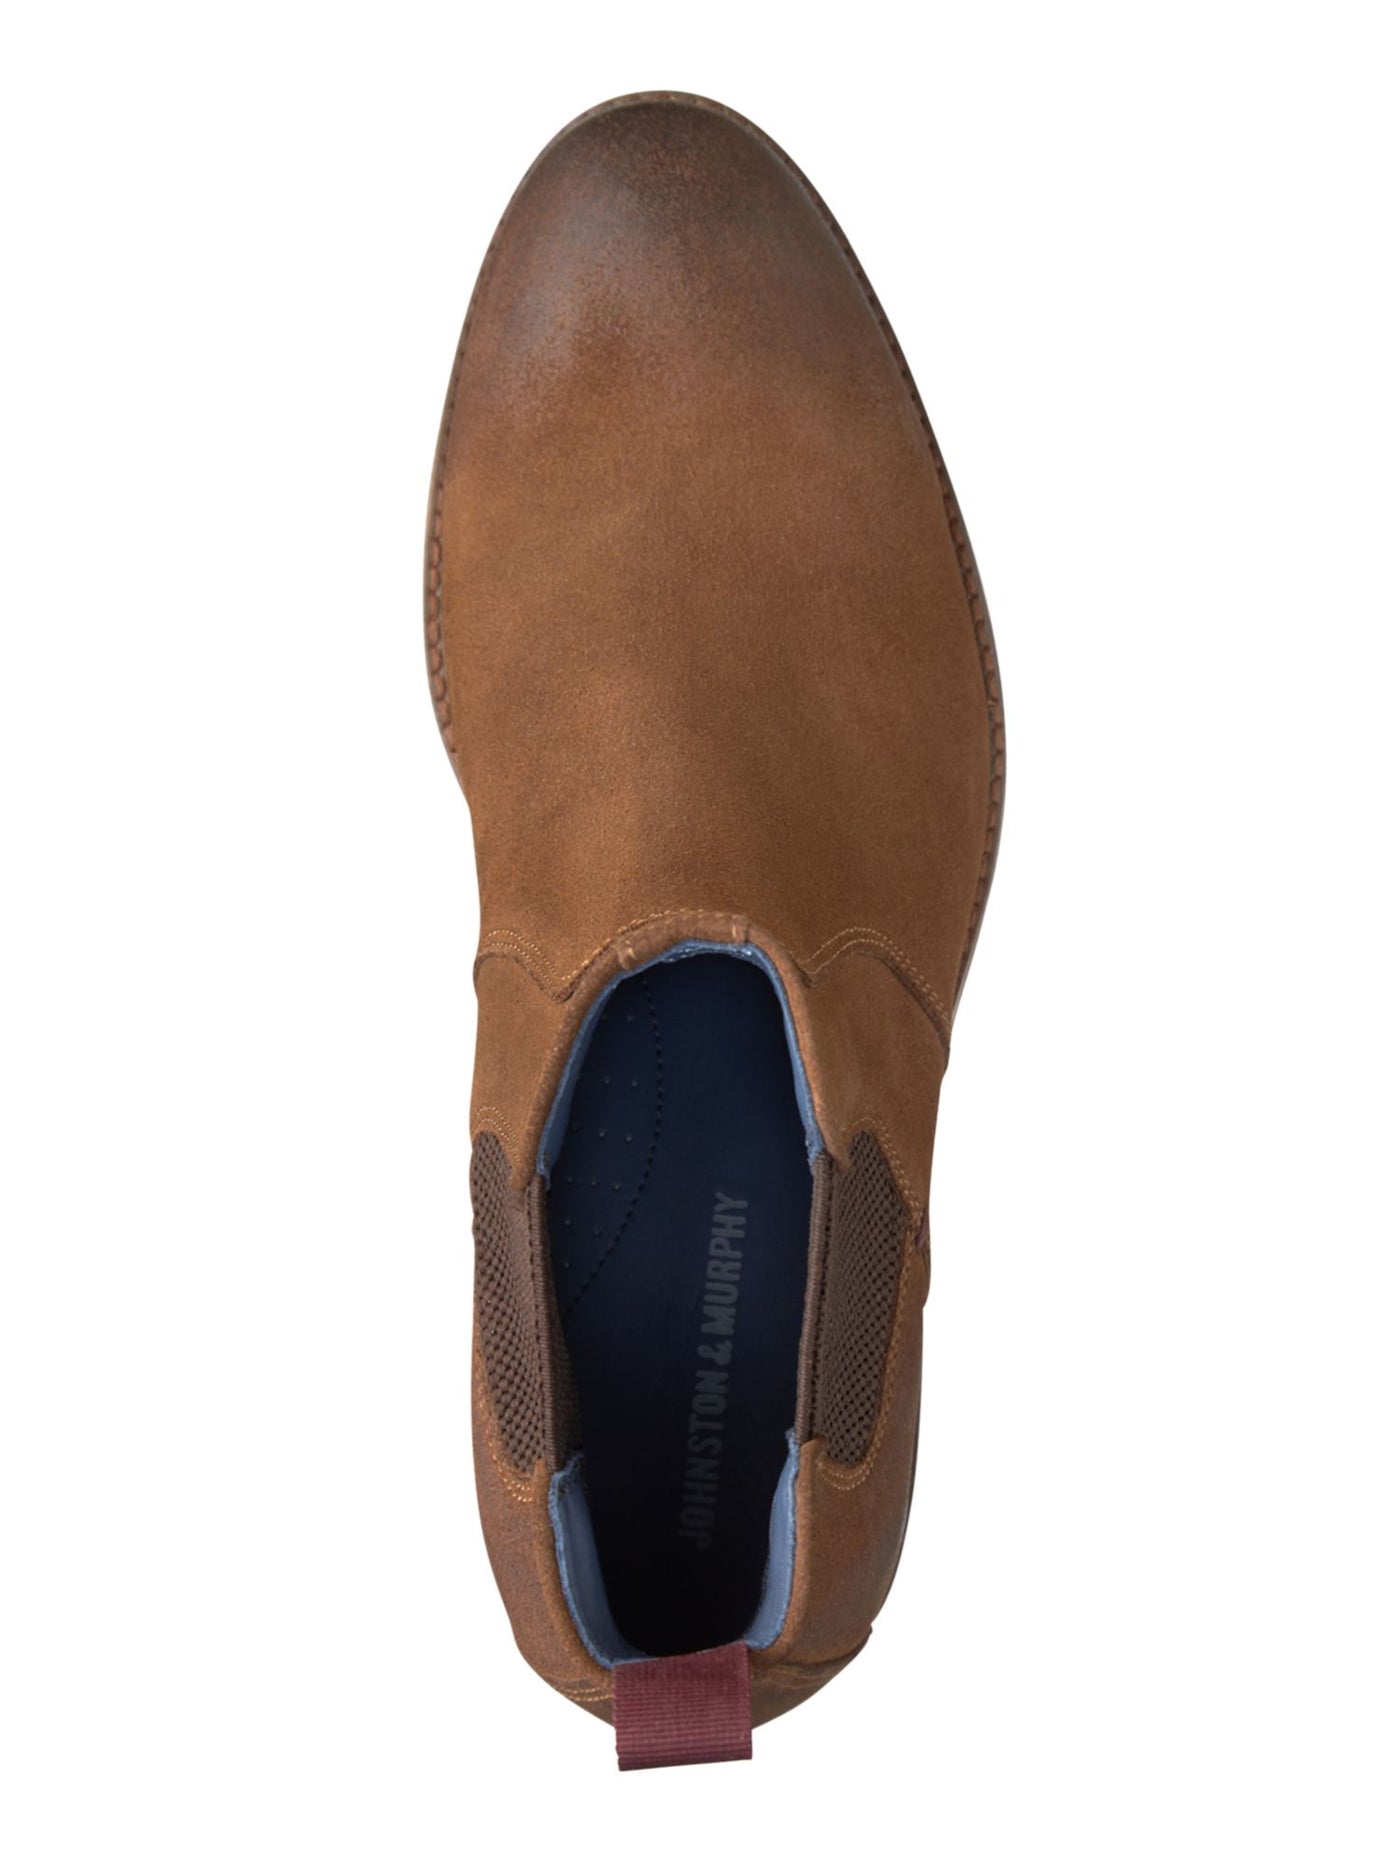 JOHNSTON & MURPHY Mens Brown Goring Comfort Danby Round Toe Block Heel Leather Boots 8 M